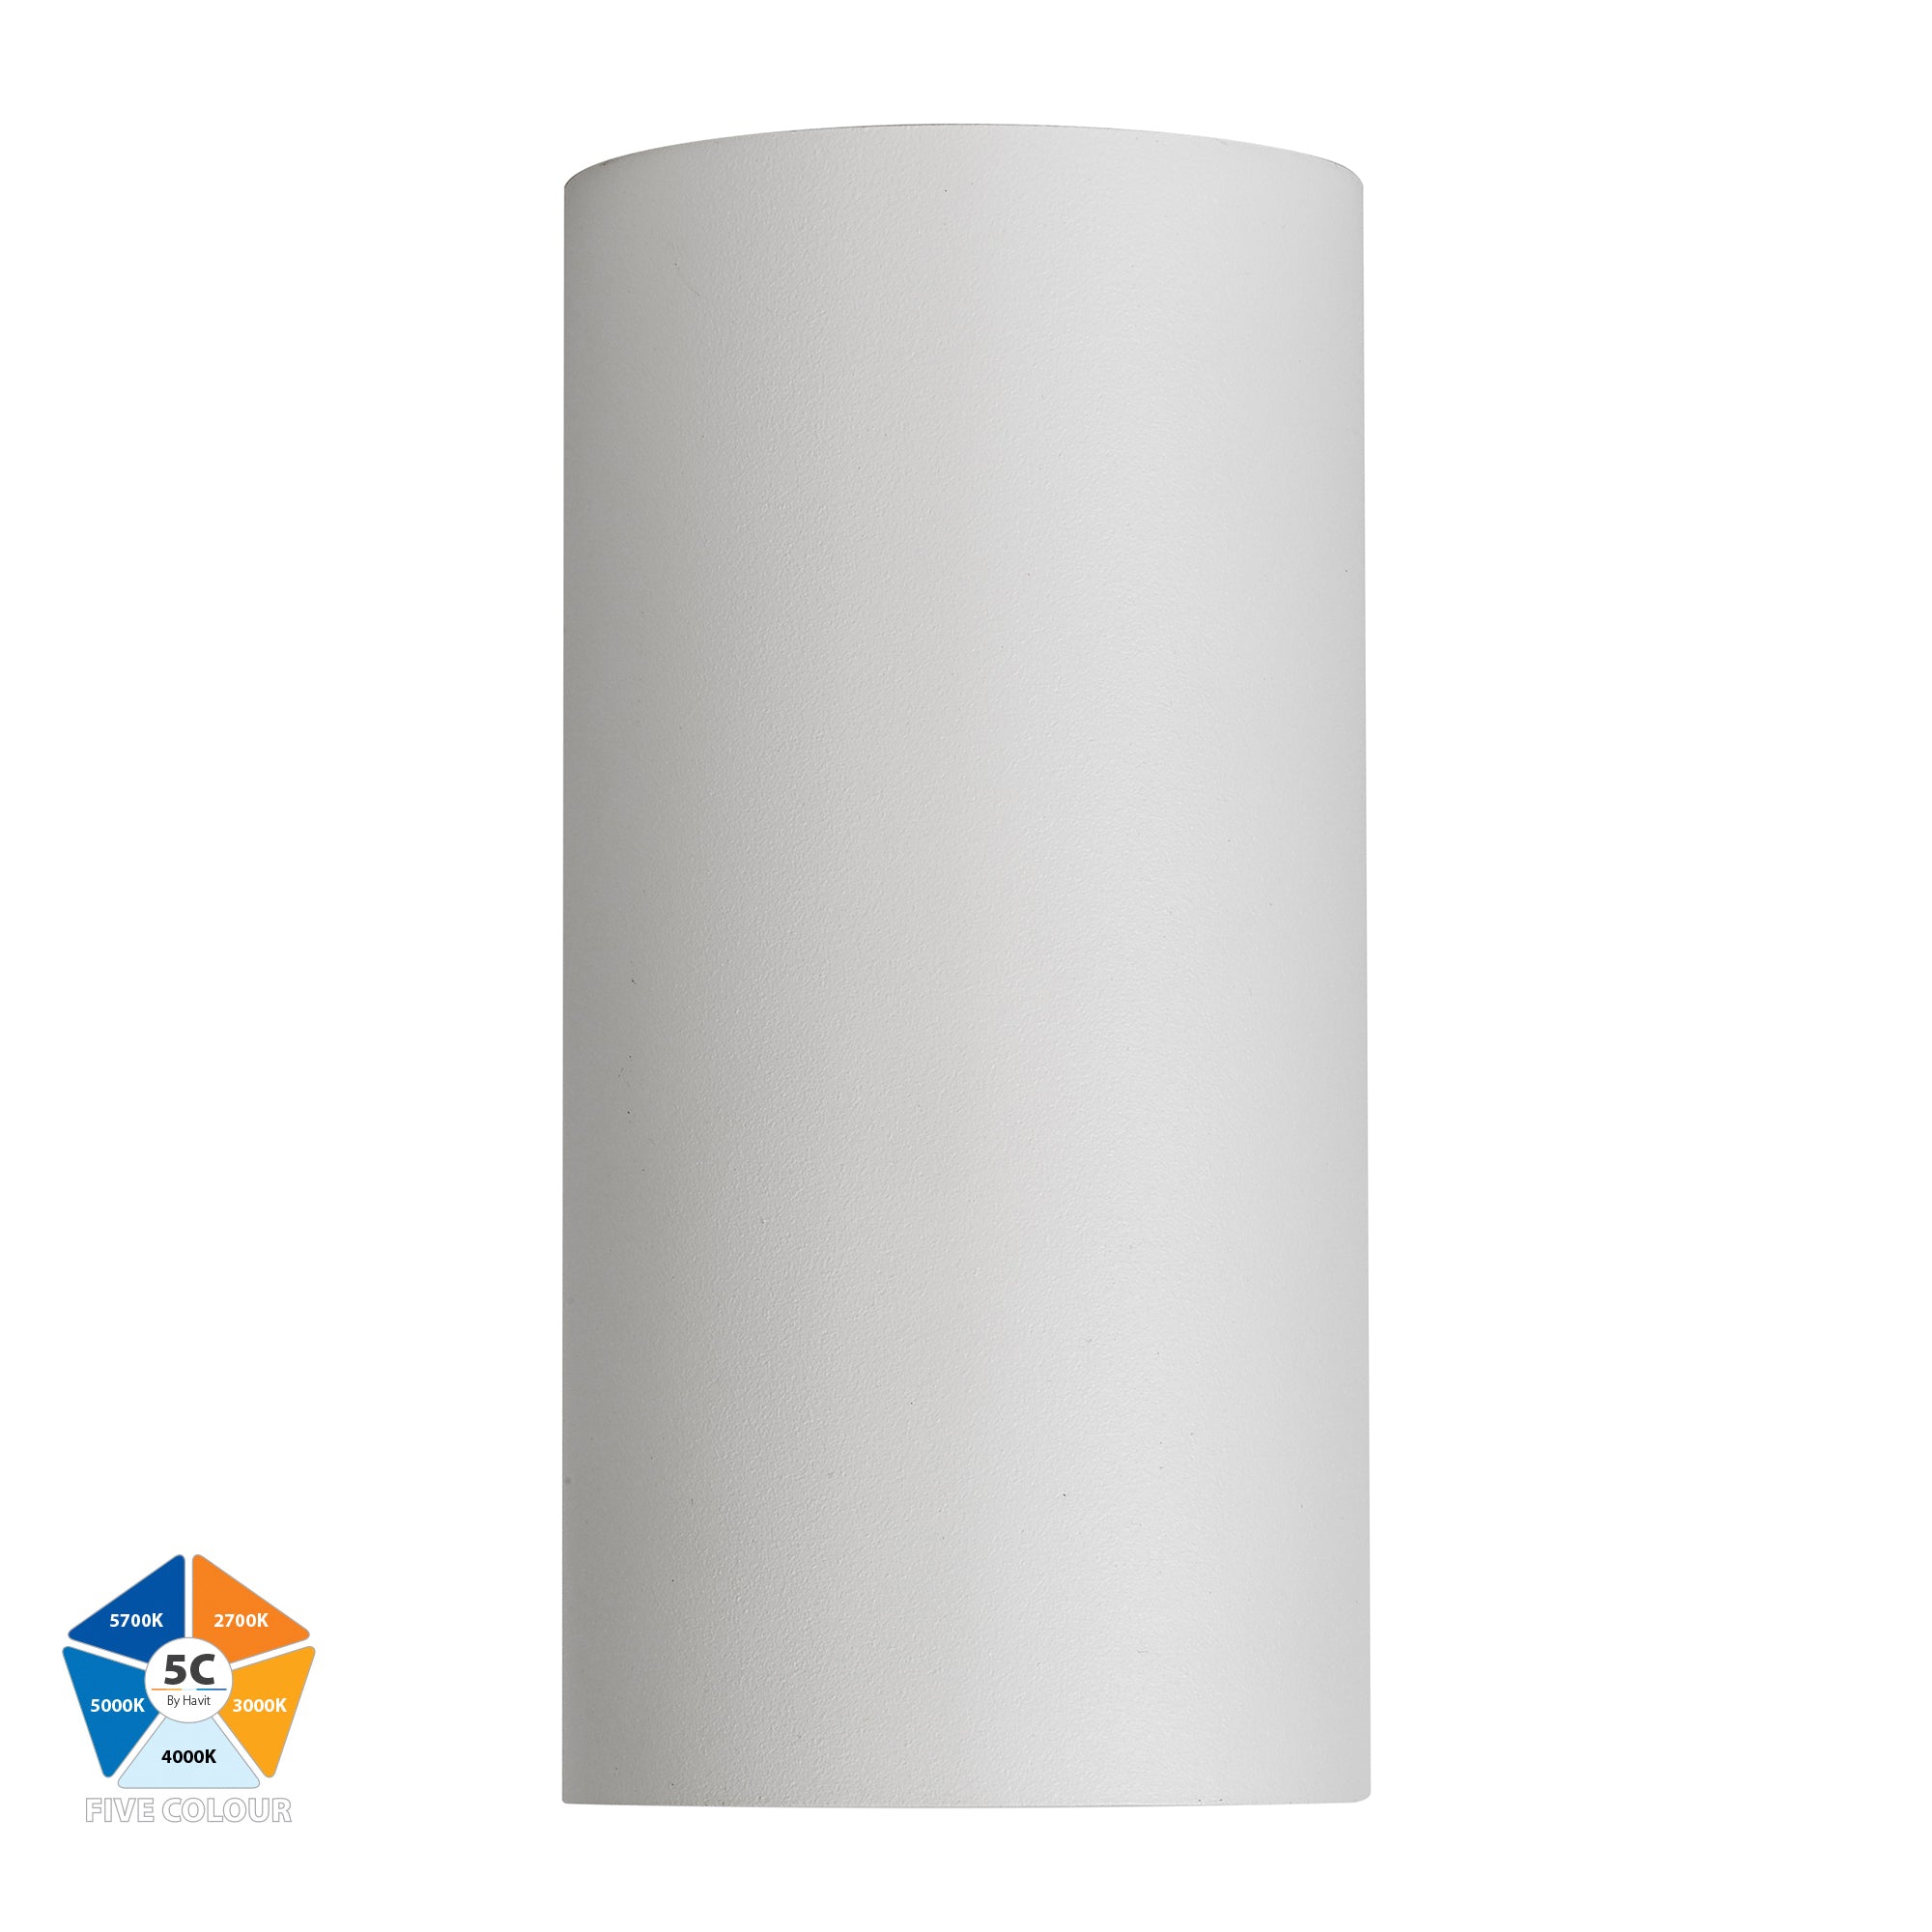 HV3625S-ALUWHT- Aries Aluminium White Fixed Down LED Wall Light